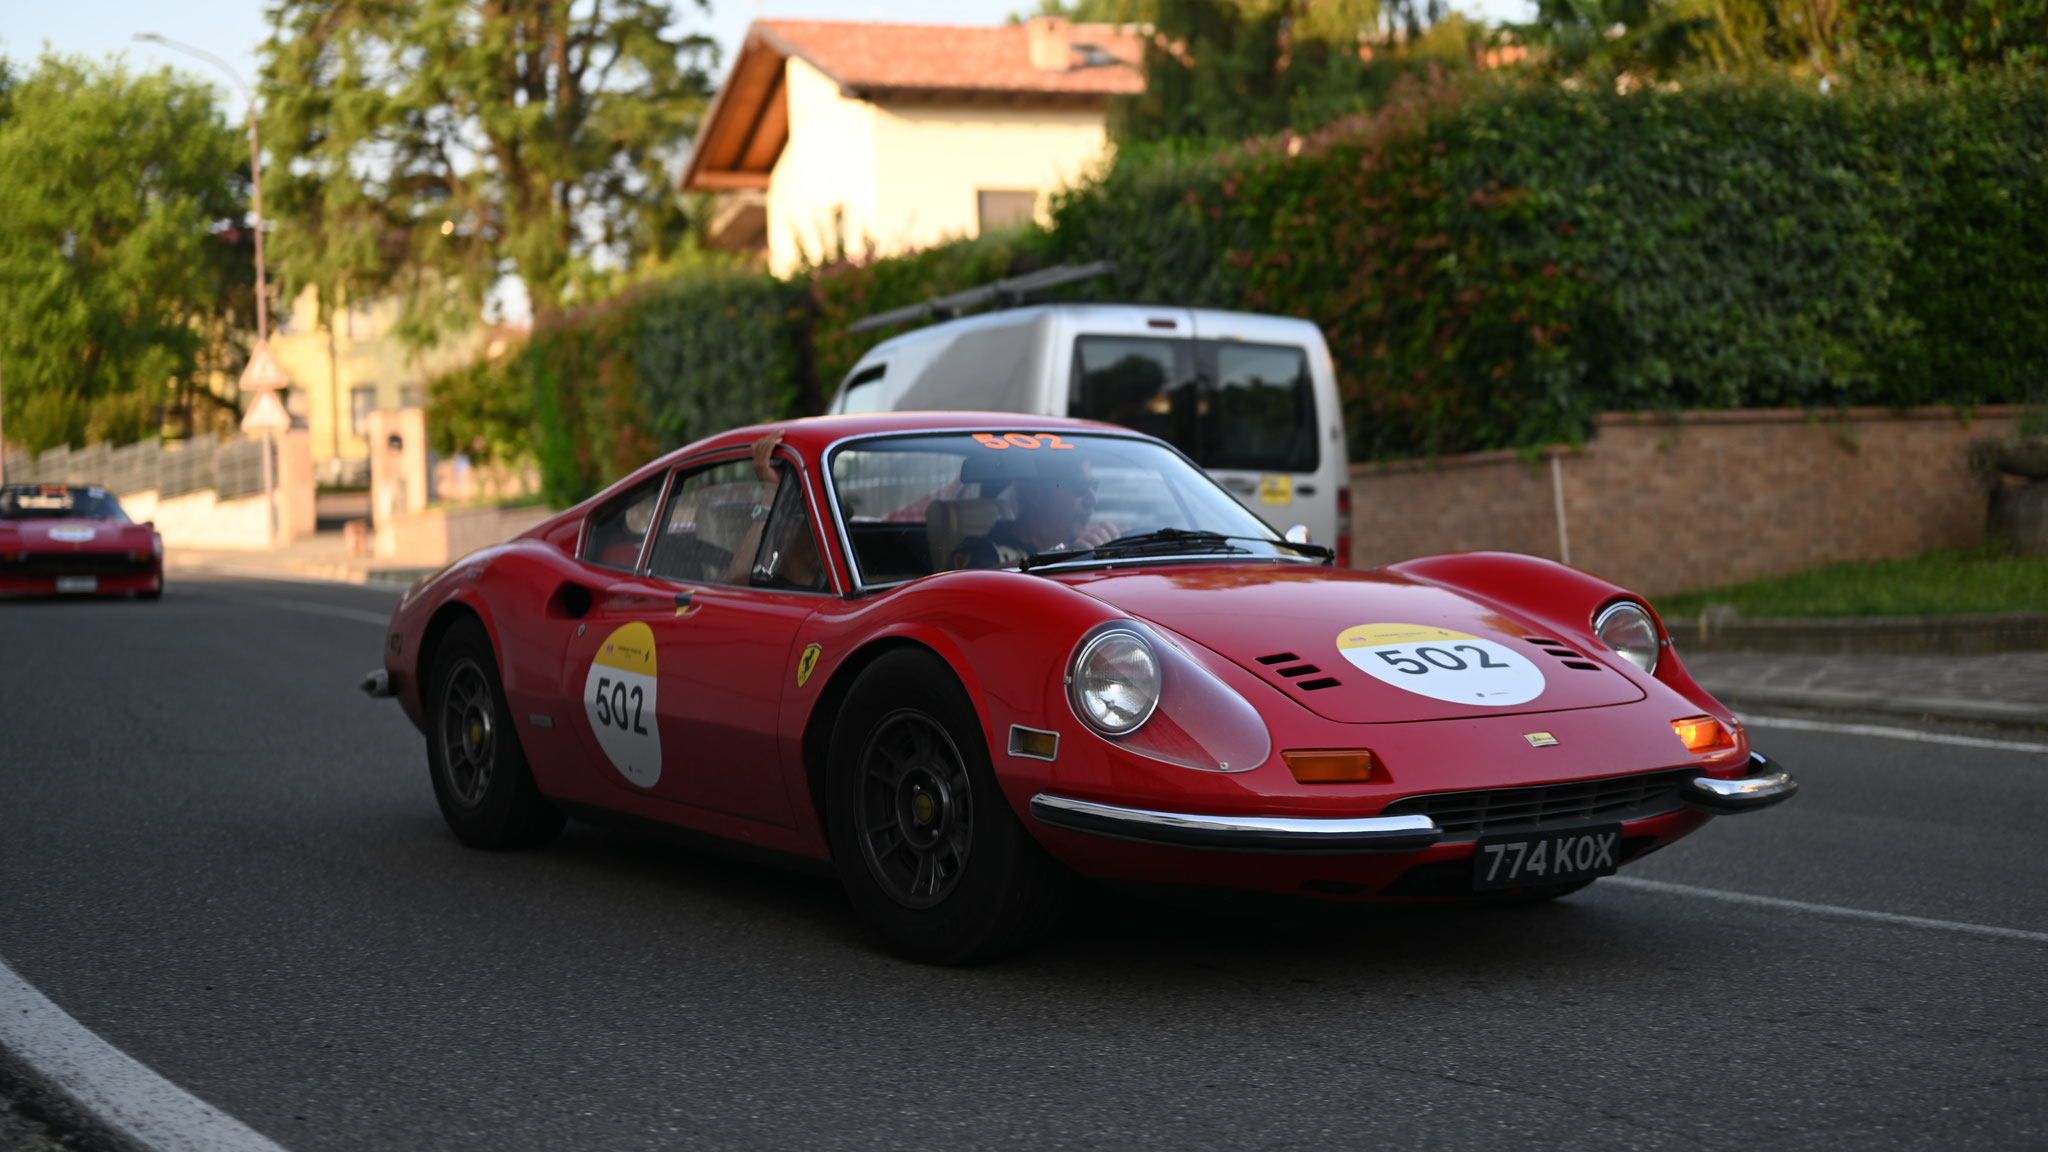 Ferrari Dino 246 - 774KOX (GB)